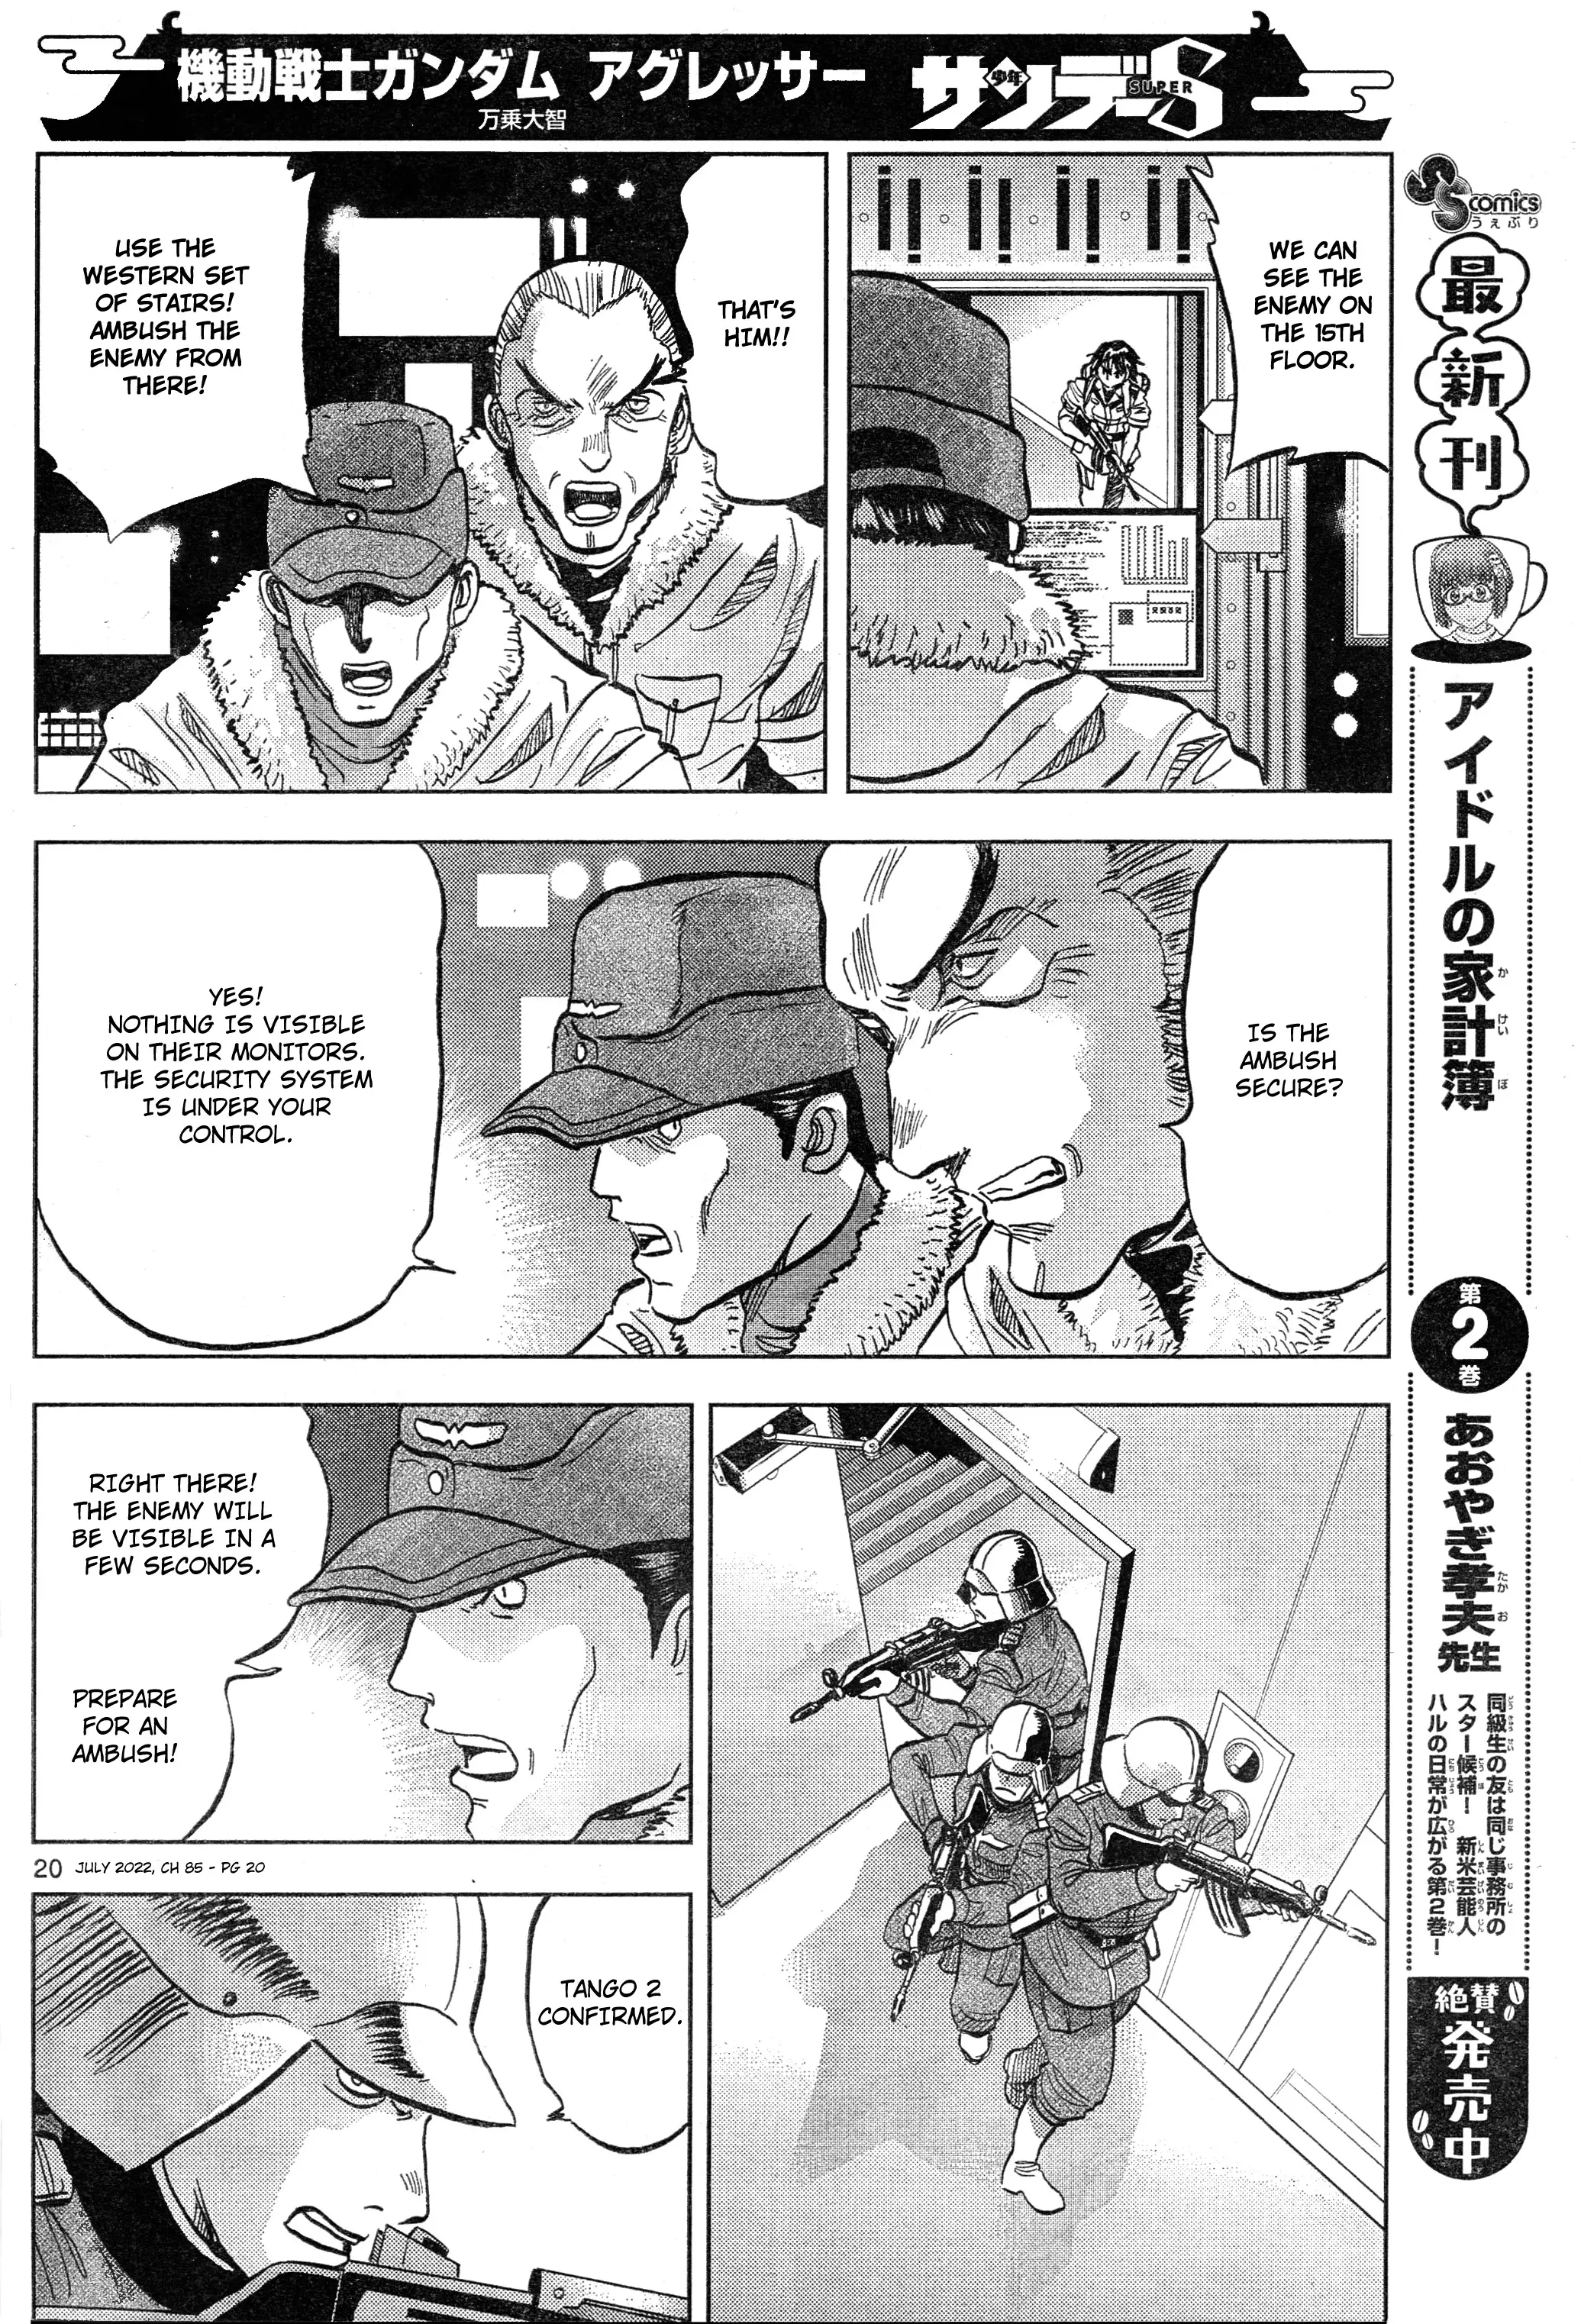 Mobile Suit Gundam Aggressor - 85 page 20-55071ae0